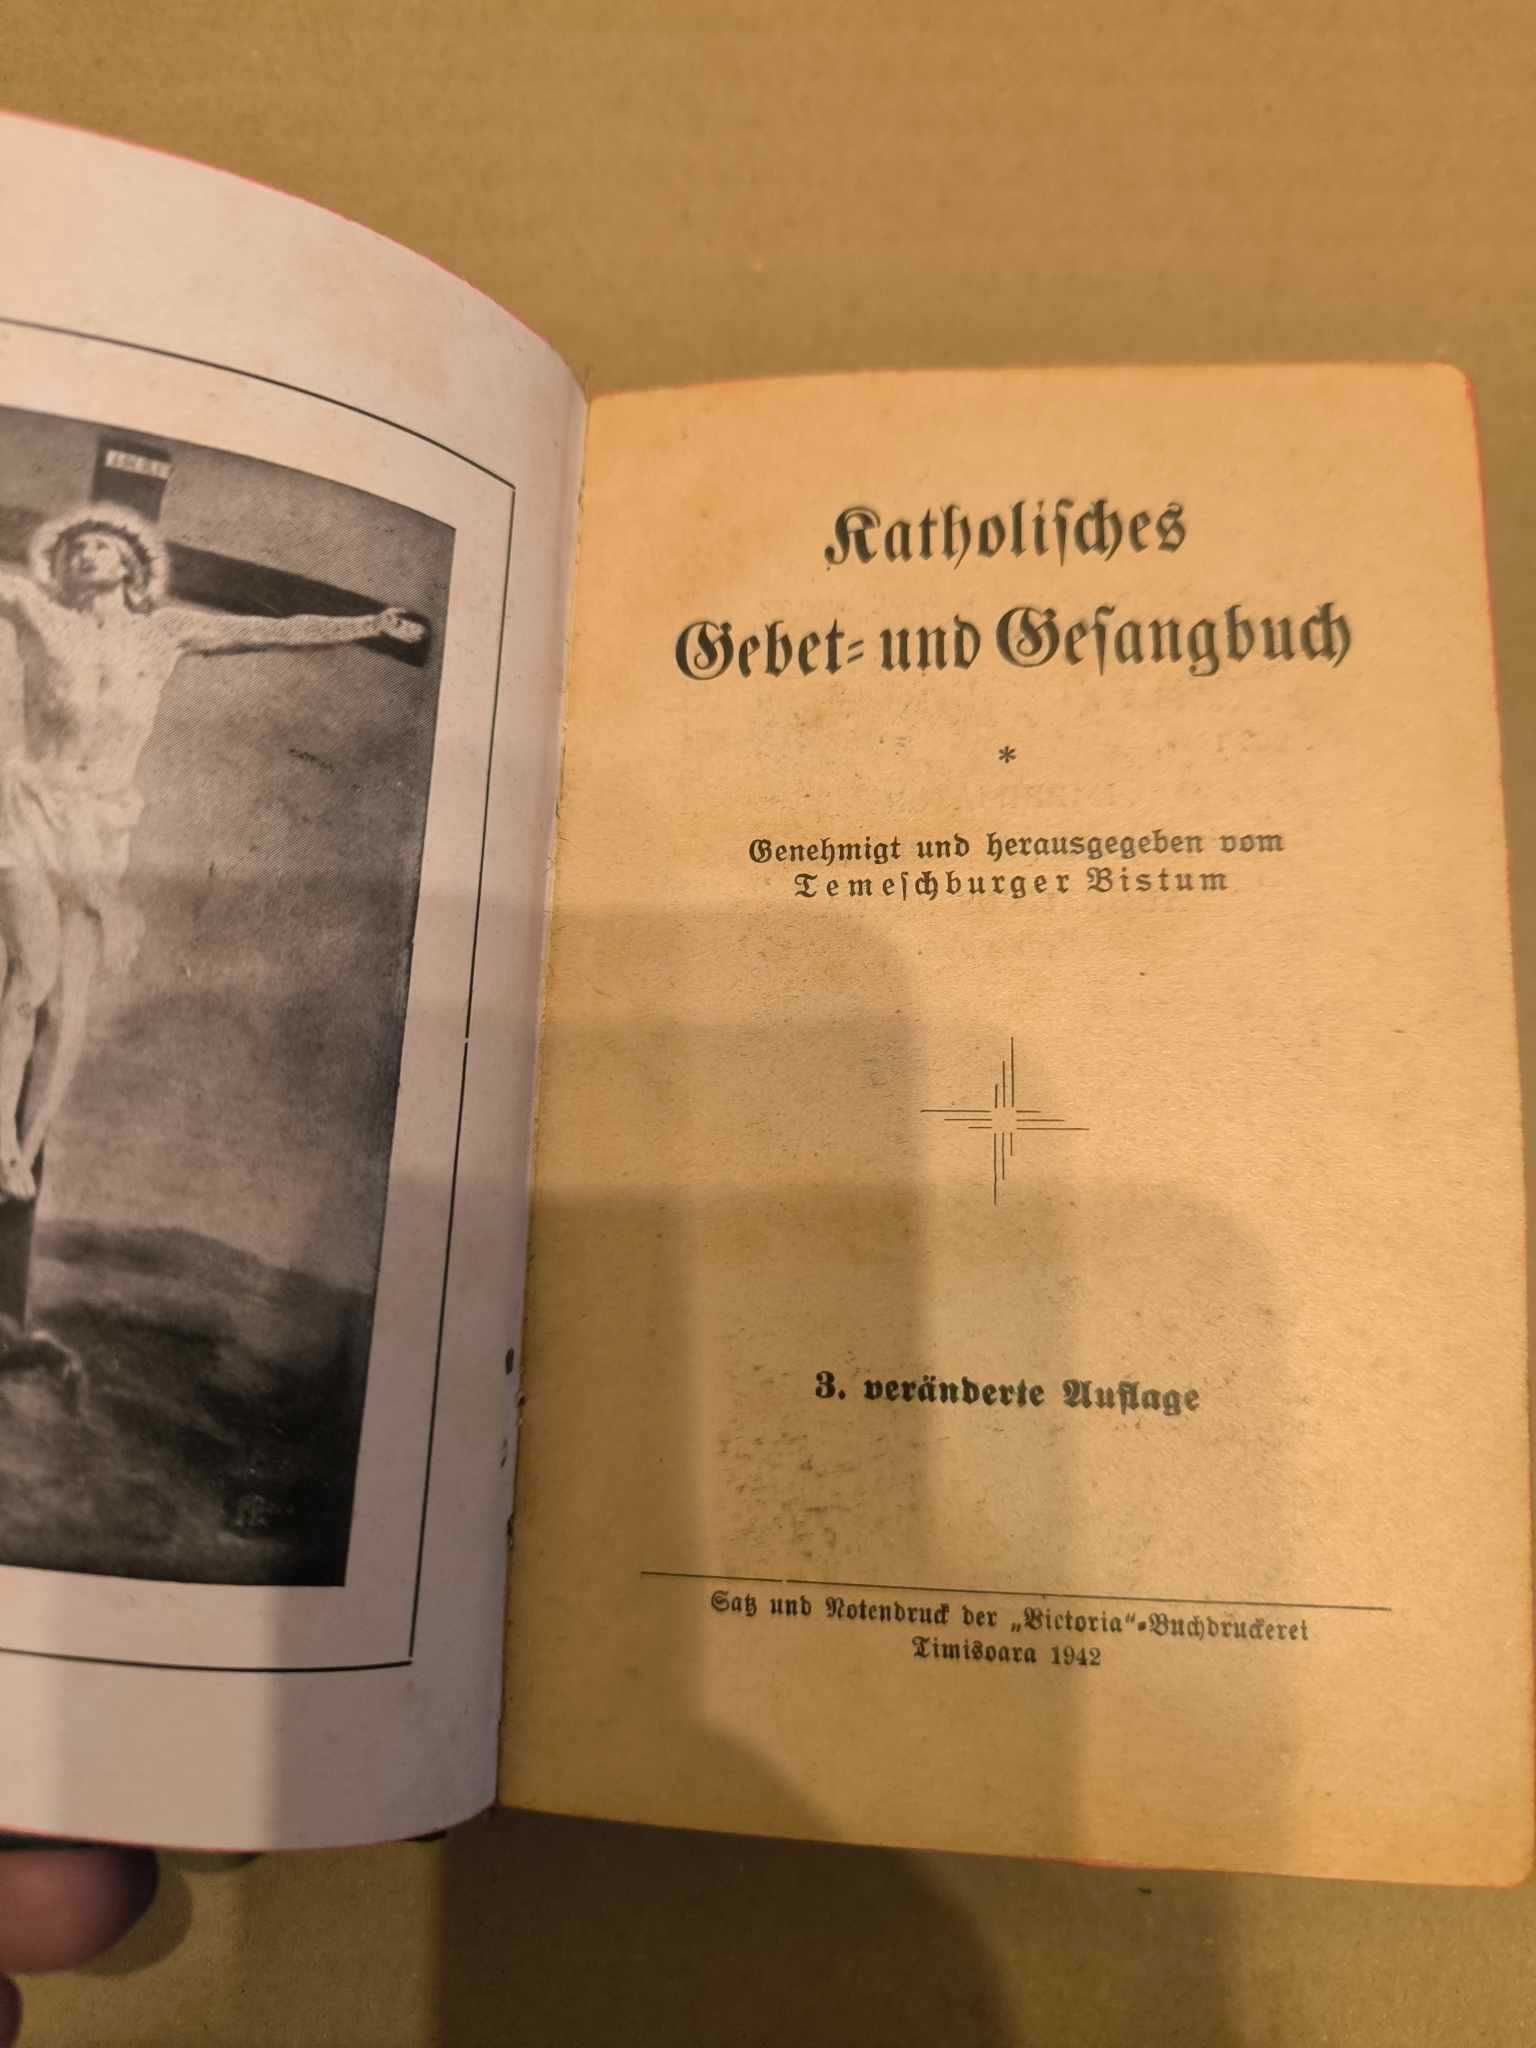 Carte de rugaciuni si imnuri catolice, Limba germana,  5 Aprilis 1942